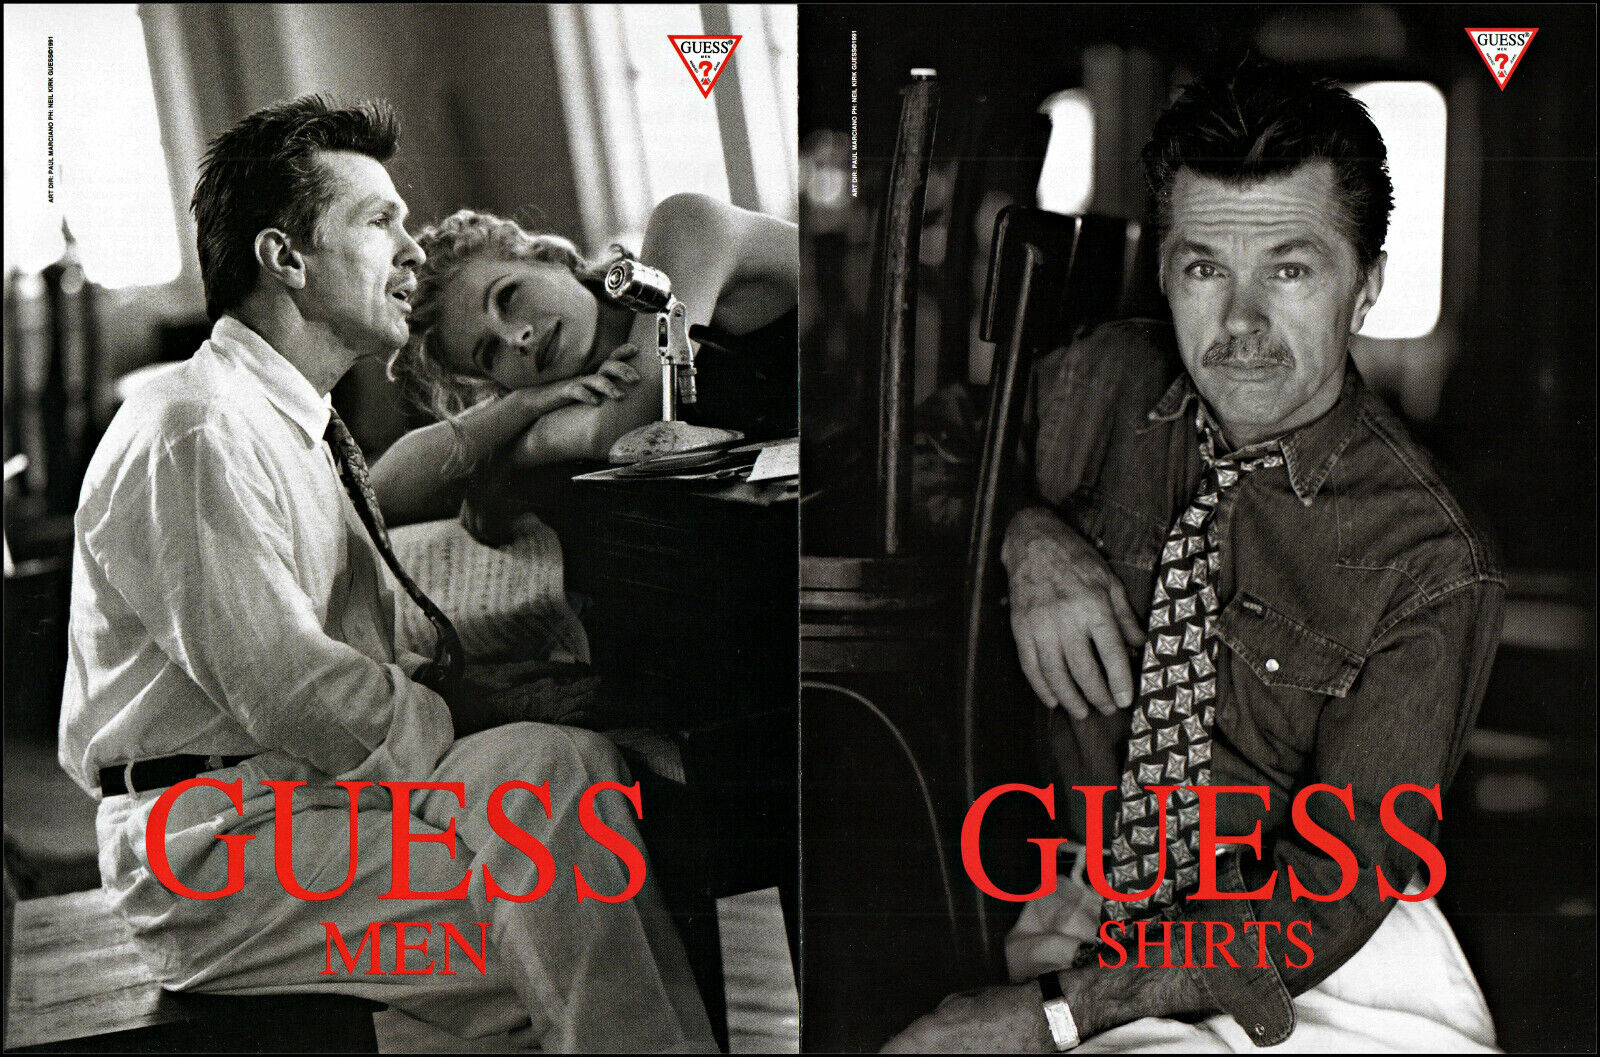 1991 Tom Skerritt & pretty woman Guess men's shirts retro photo print ad ads81